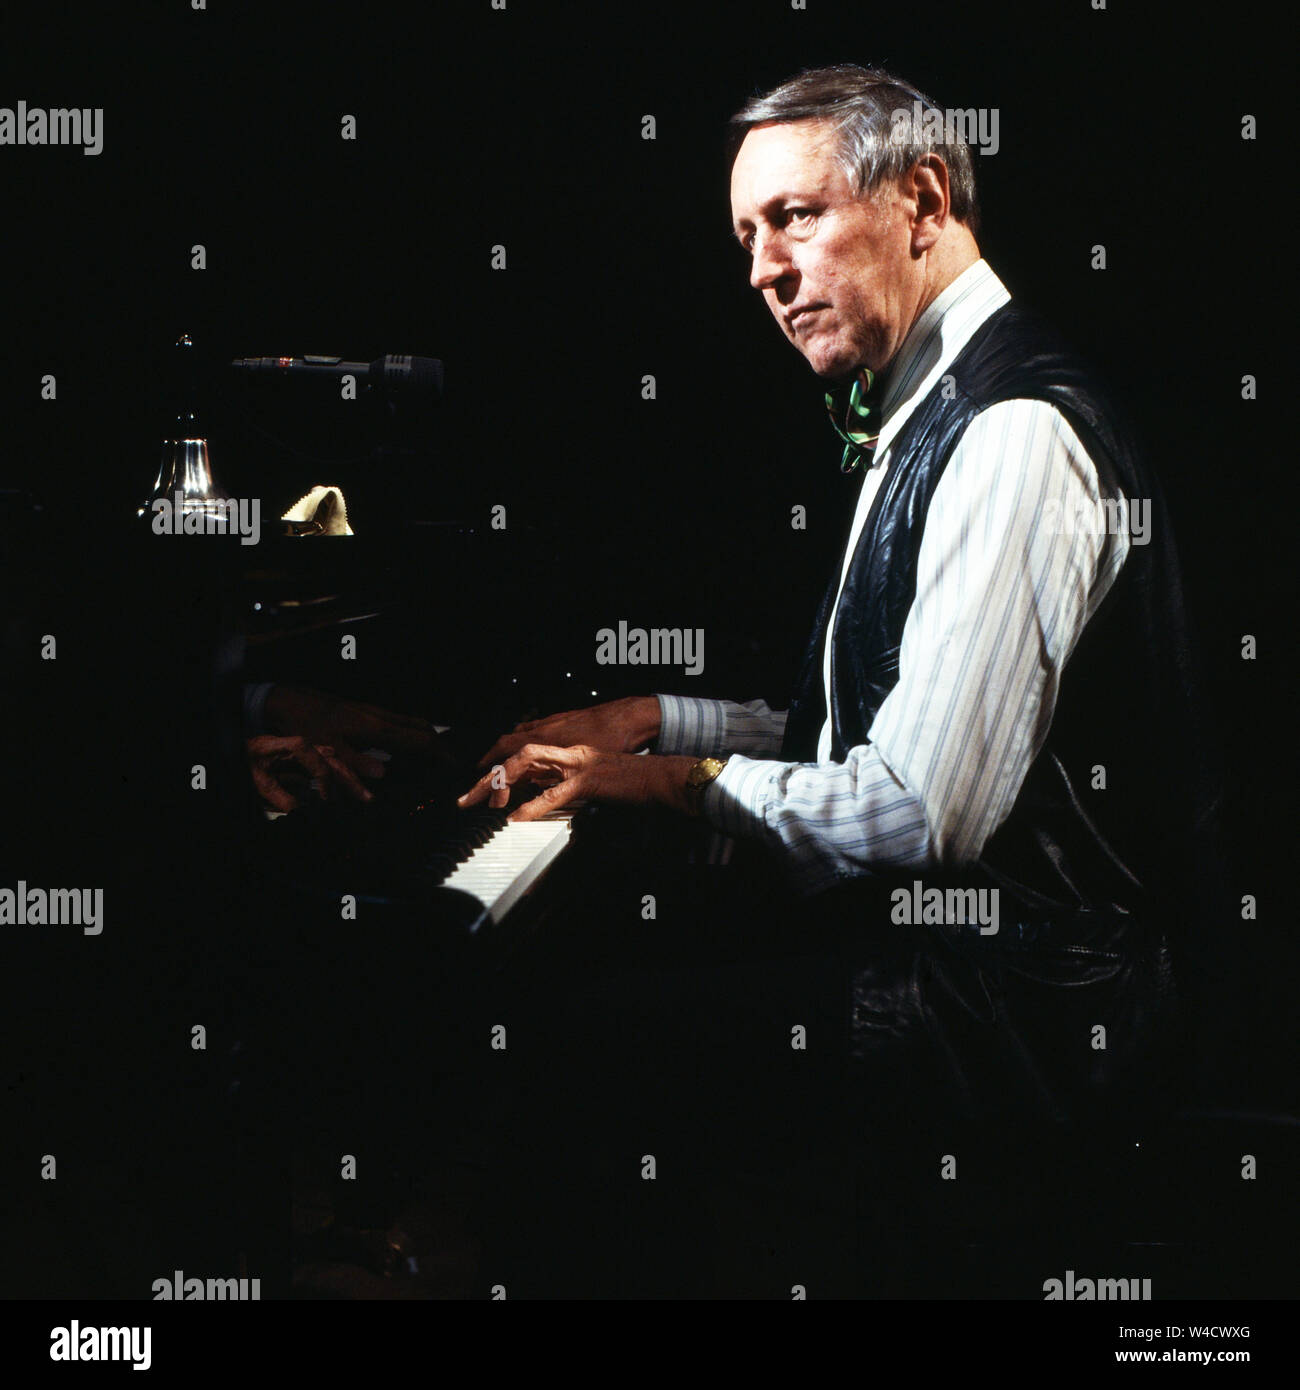 Hans van der Sys, Jazz- und Ragtime-Musiker, Deutschland 1980. Jazz e rag time musicista Hans van der Sys, Germania 1980. Foto Stock